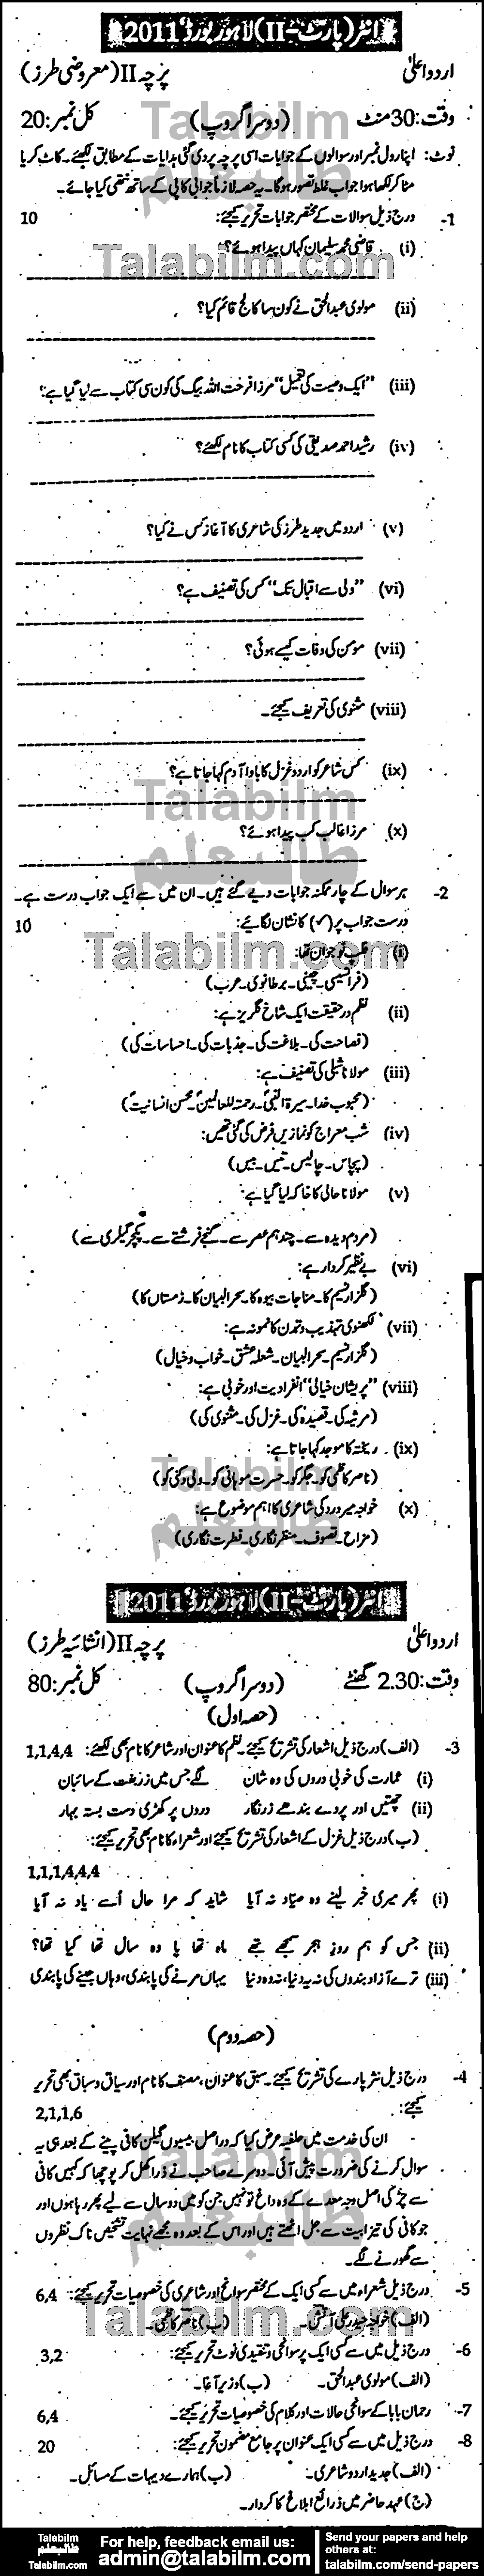 Urdu 0 past paper for Group-II 2011